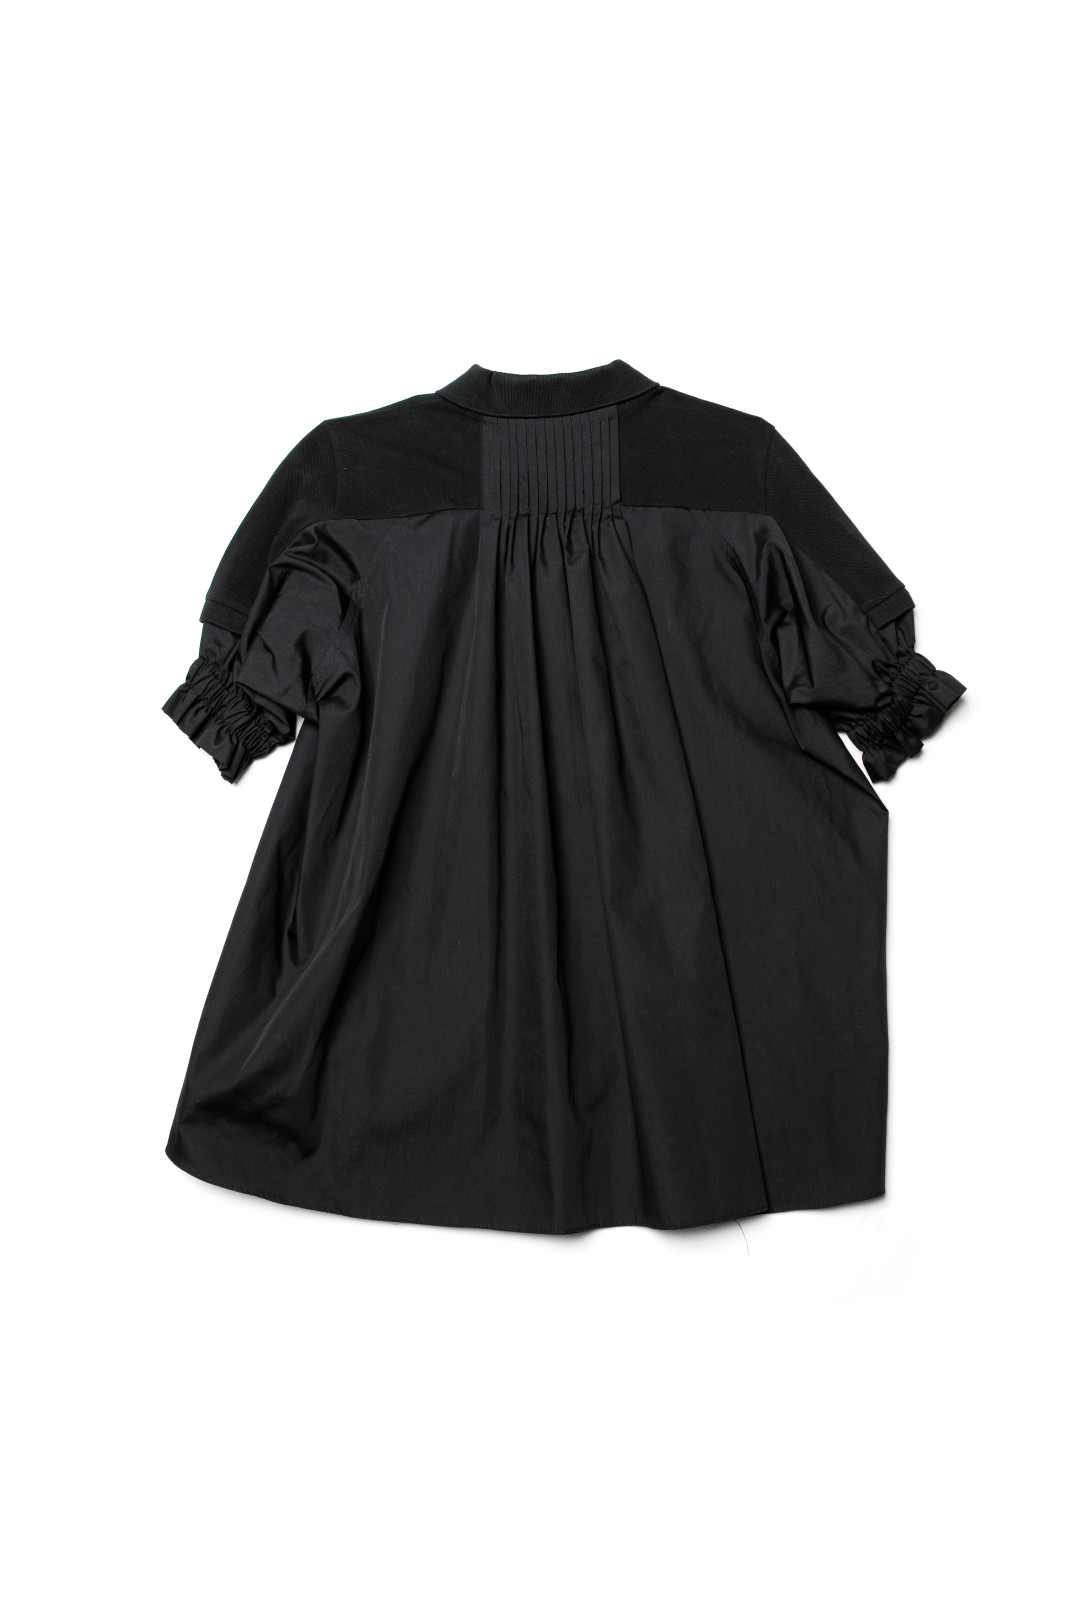 Short Sleeve polo ブラック（4万2,000円）